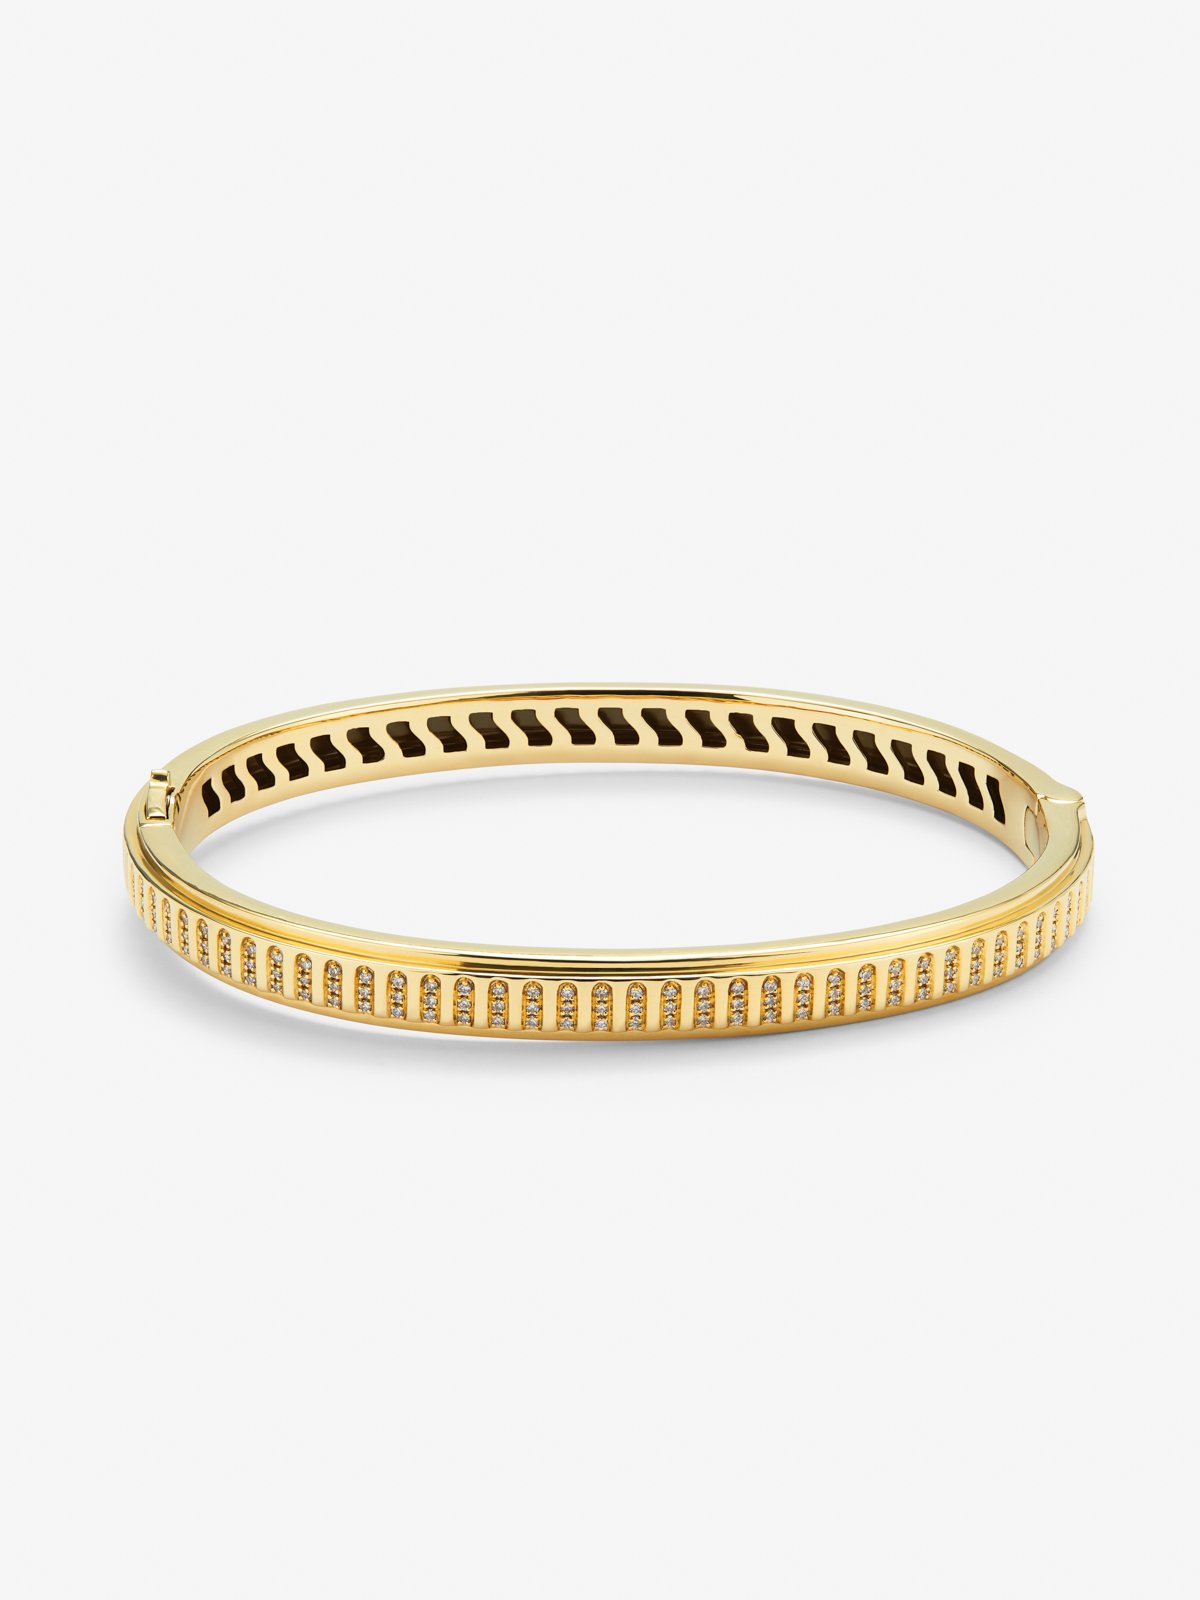 Rigid 18K yellow gold bracelet with 0.3 ct brilliant-cut diamonds